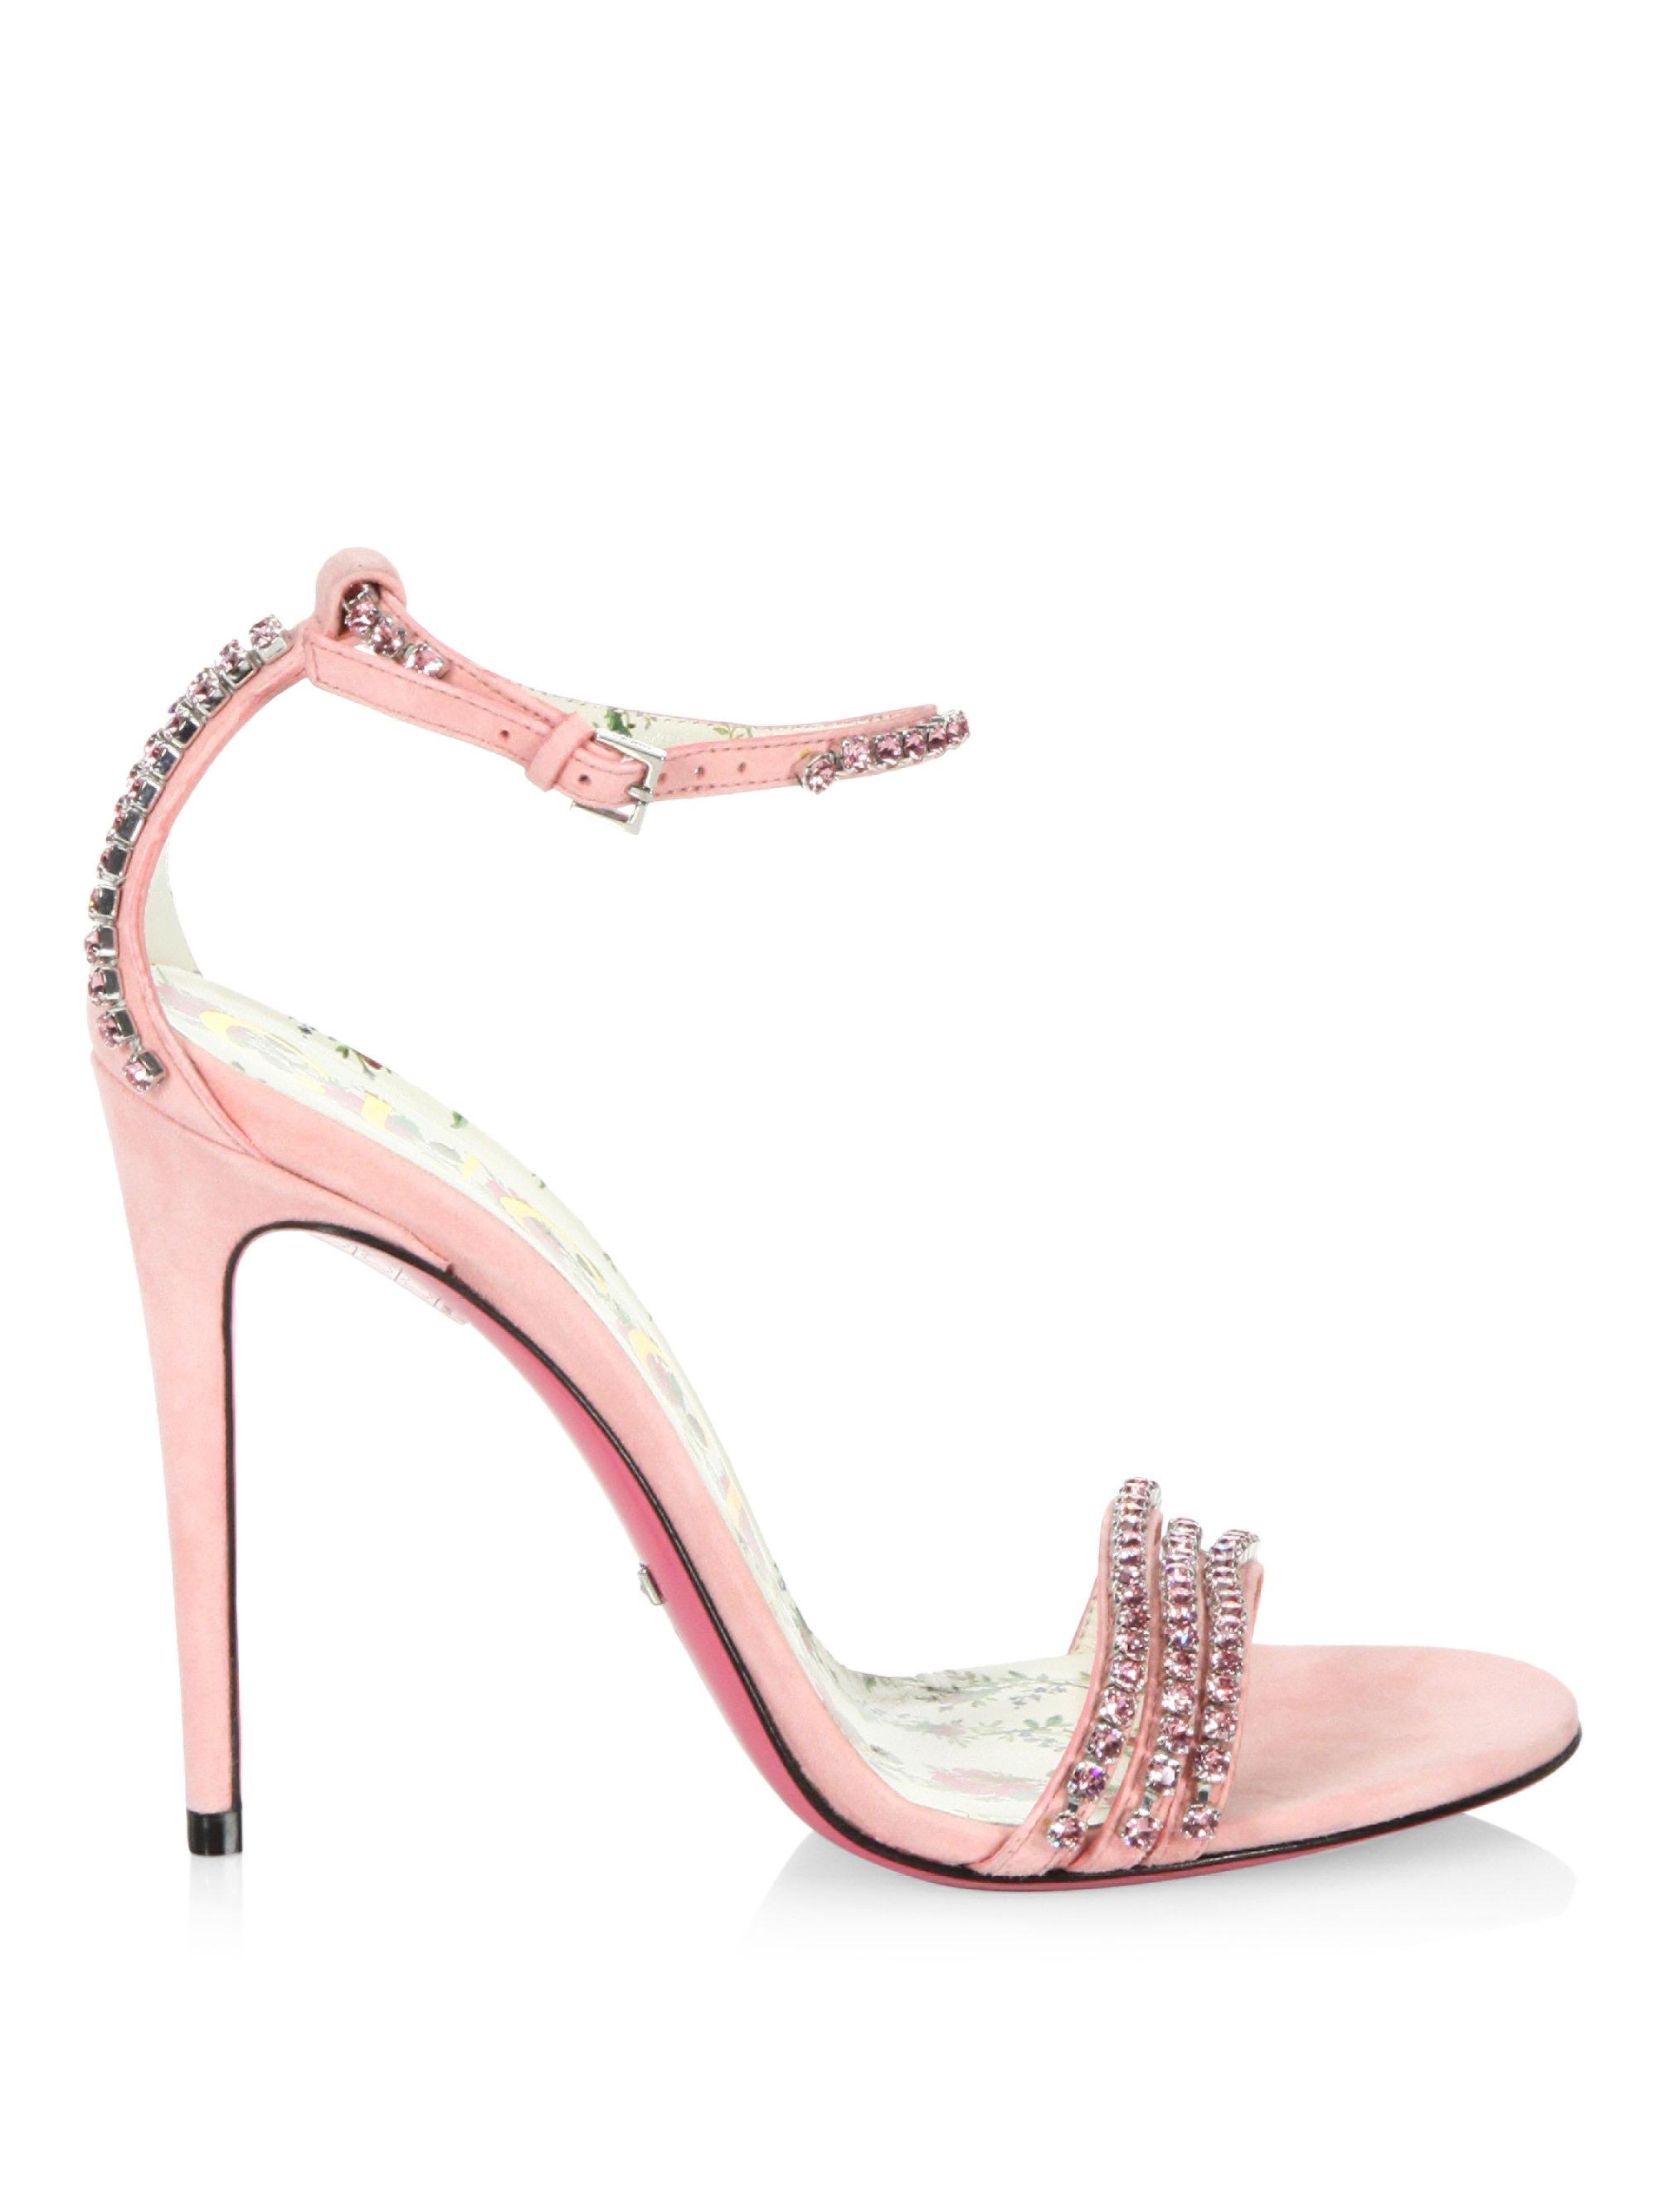 Gucci Satin Isle Jewel Sandals in Rose 